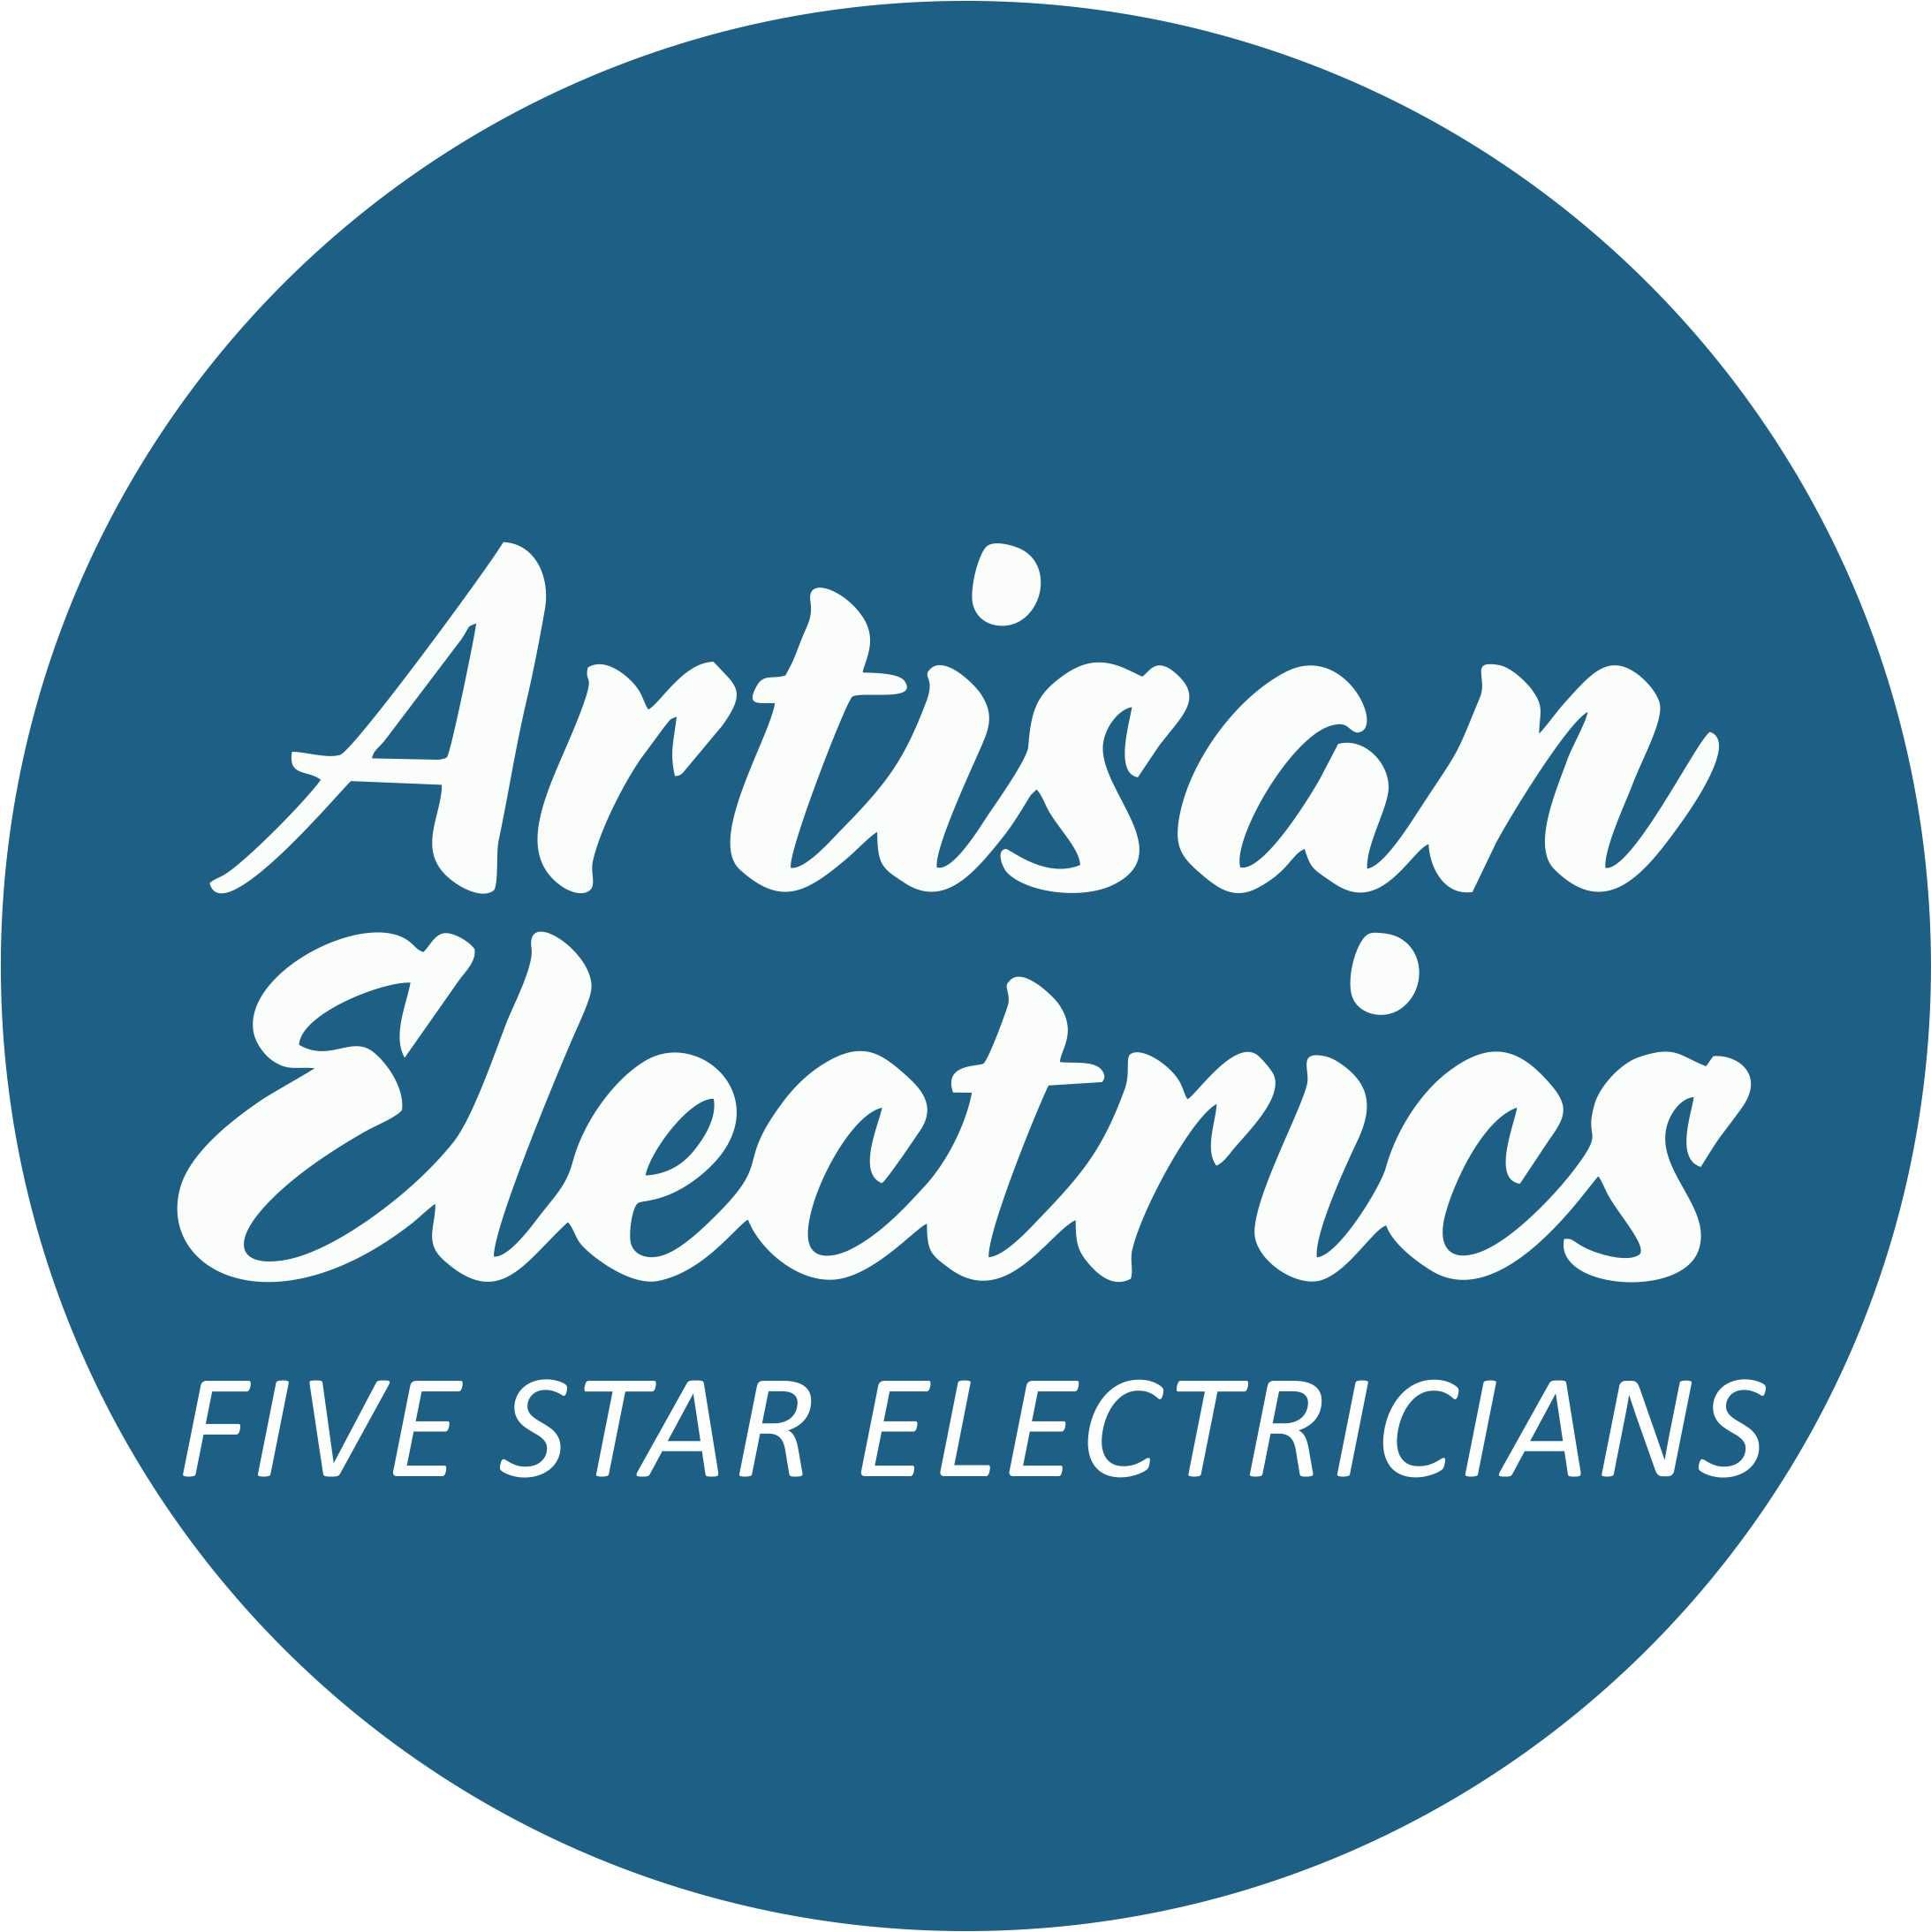 Jordan Farley- Artisan Electrics (Cambridge) Ltd